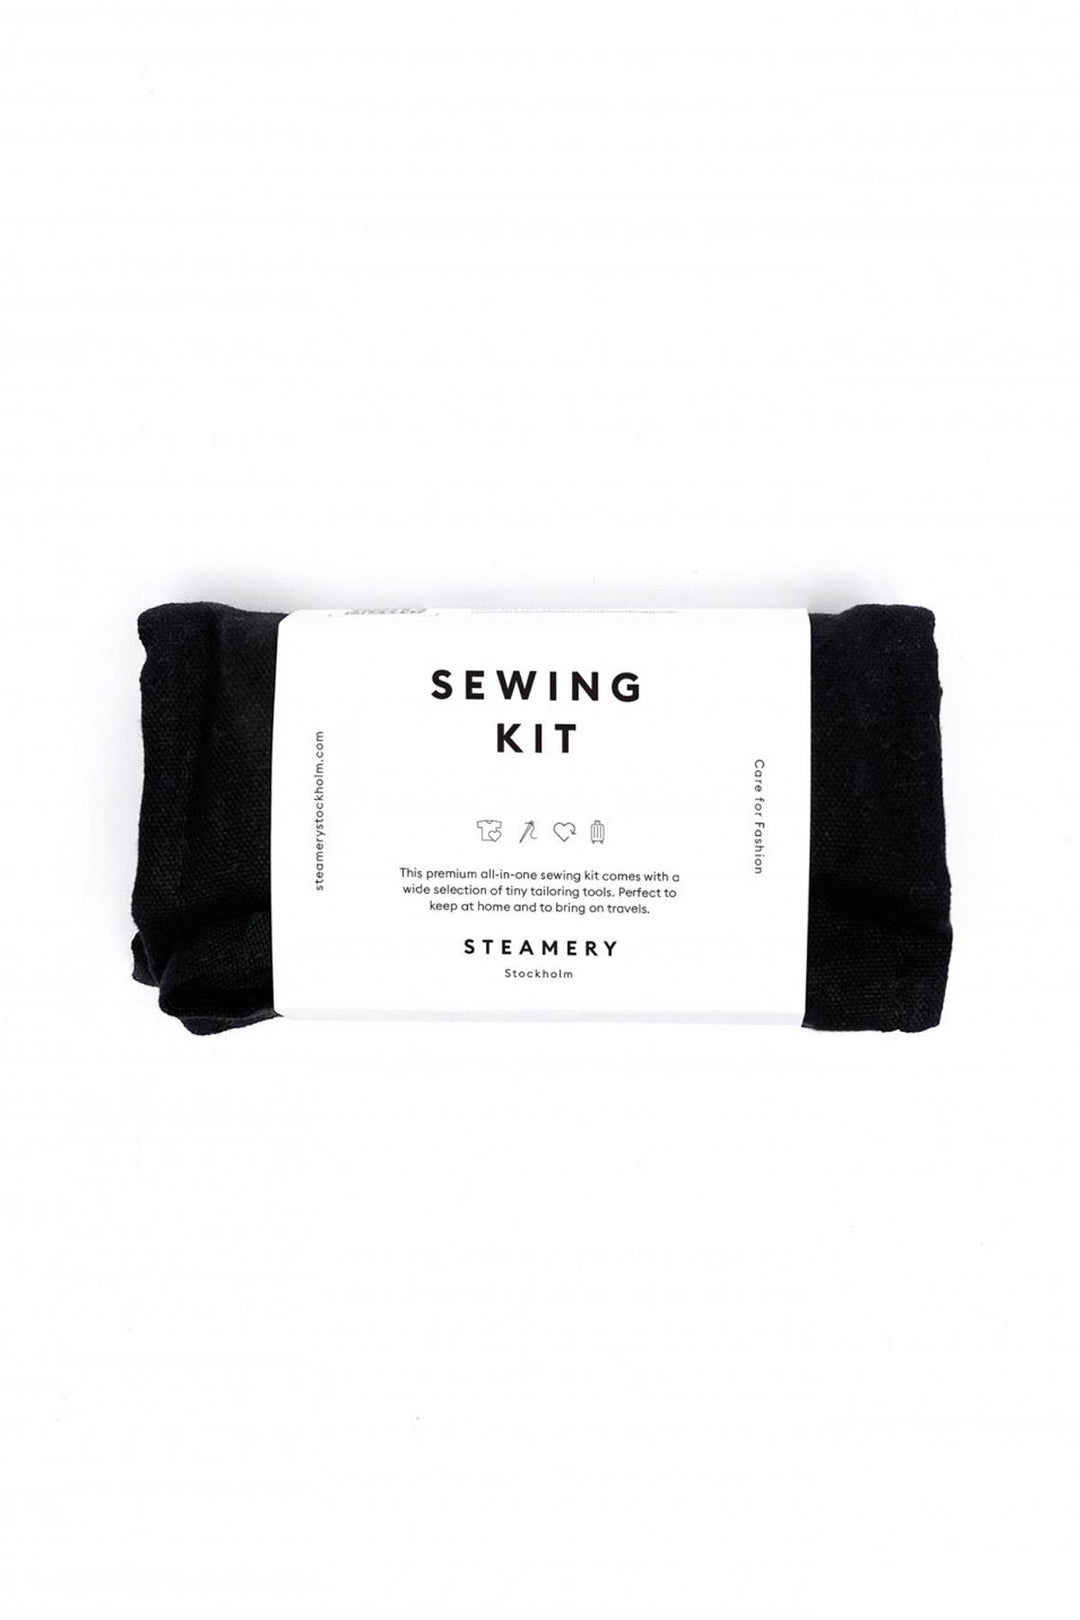 Steamery sewing kit-0